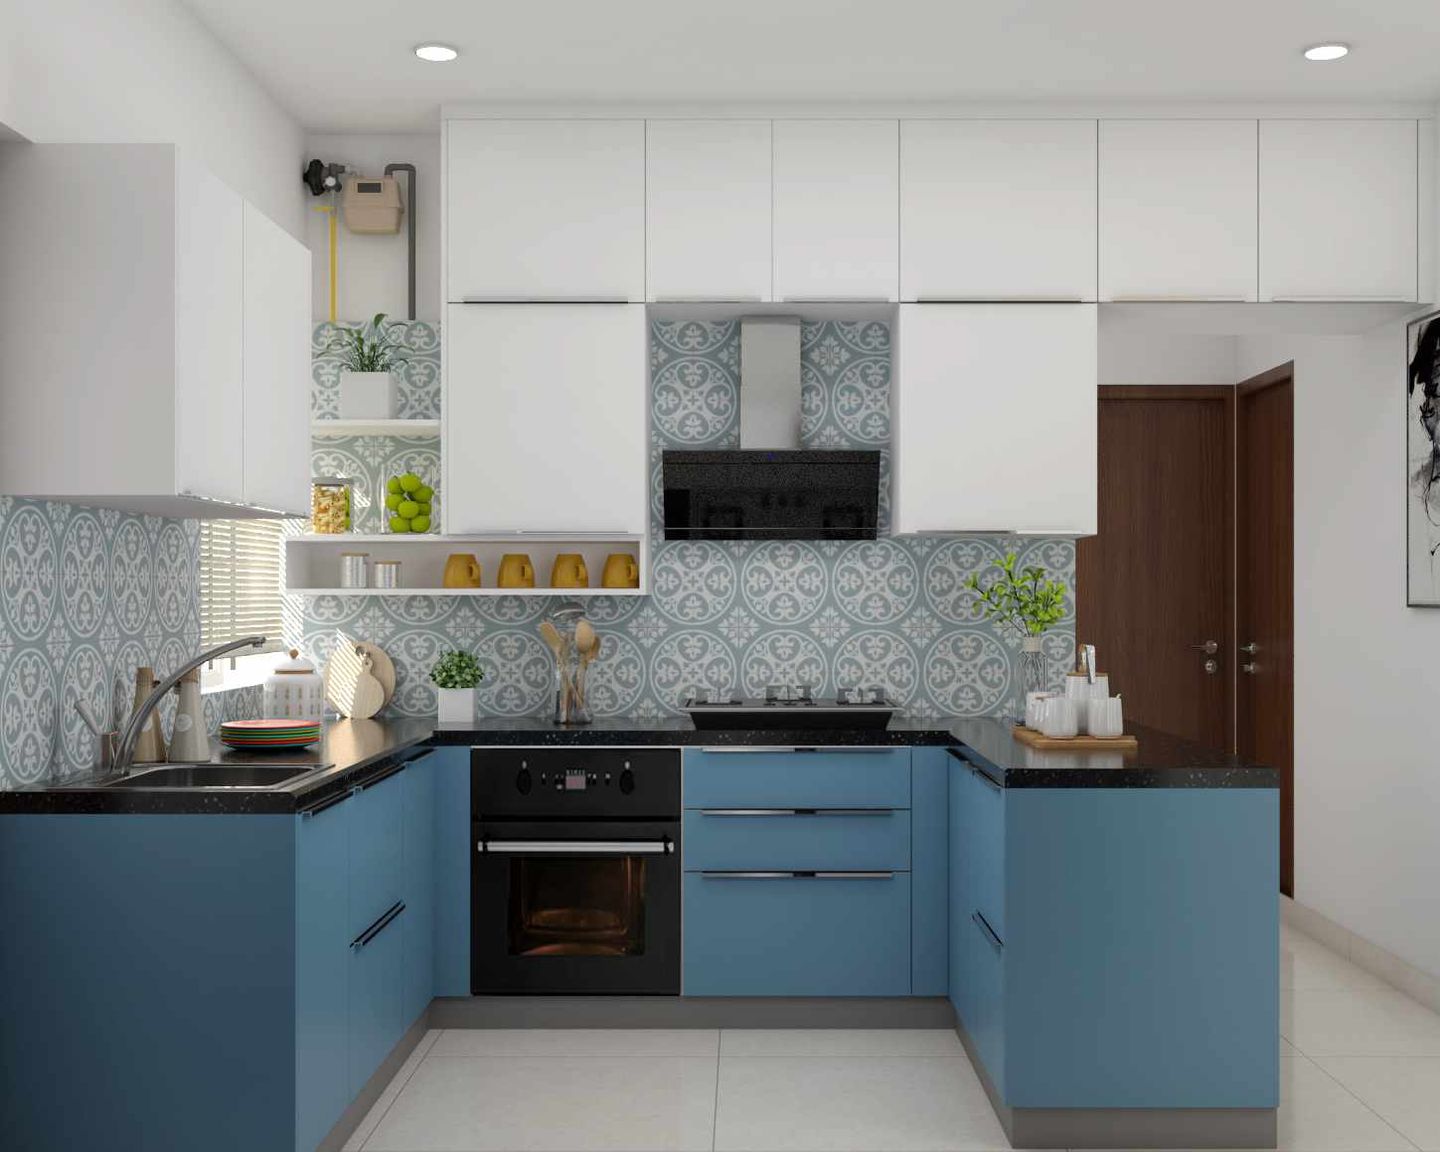 U-Shaped Kitchen Design With Blue Base Units And White Loft Storage - Livspace